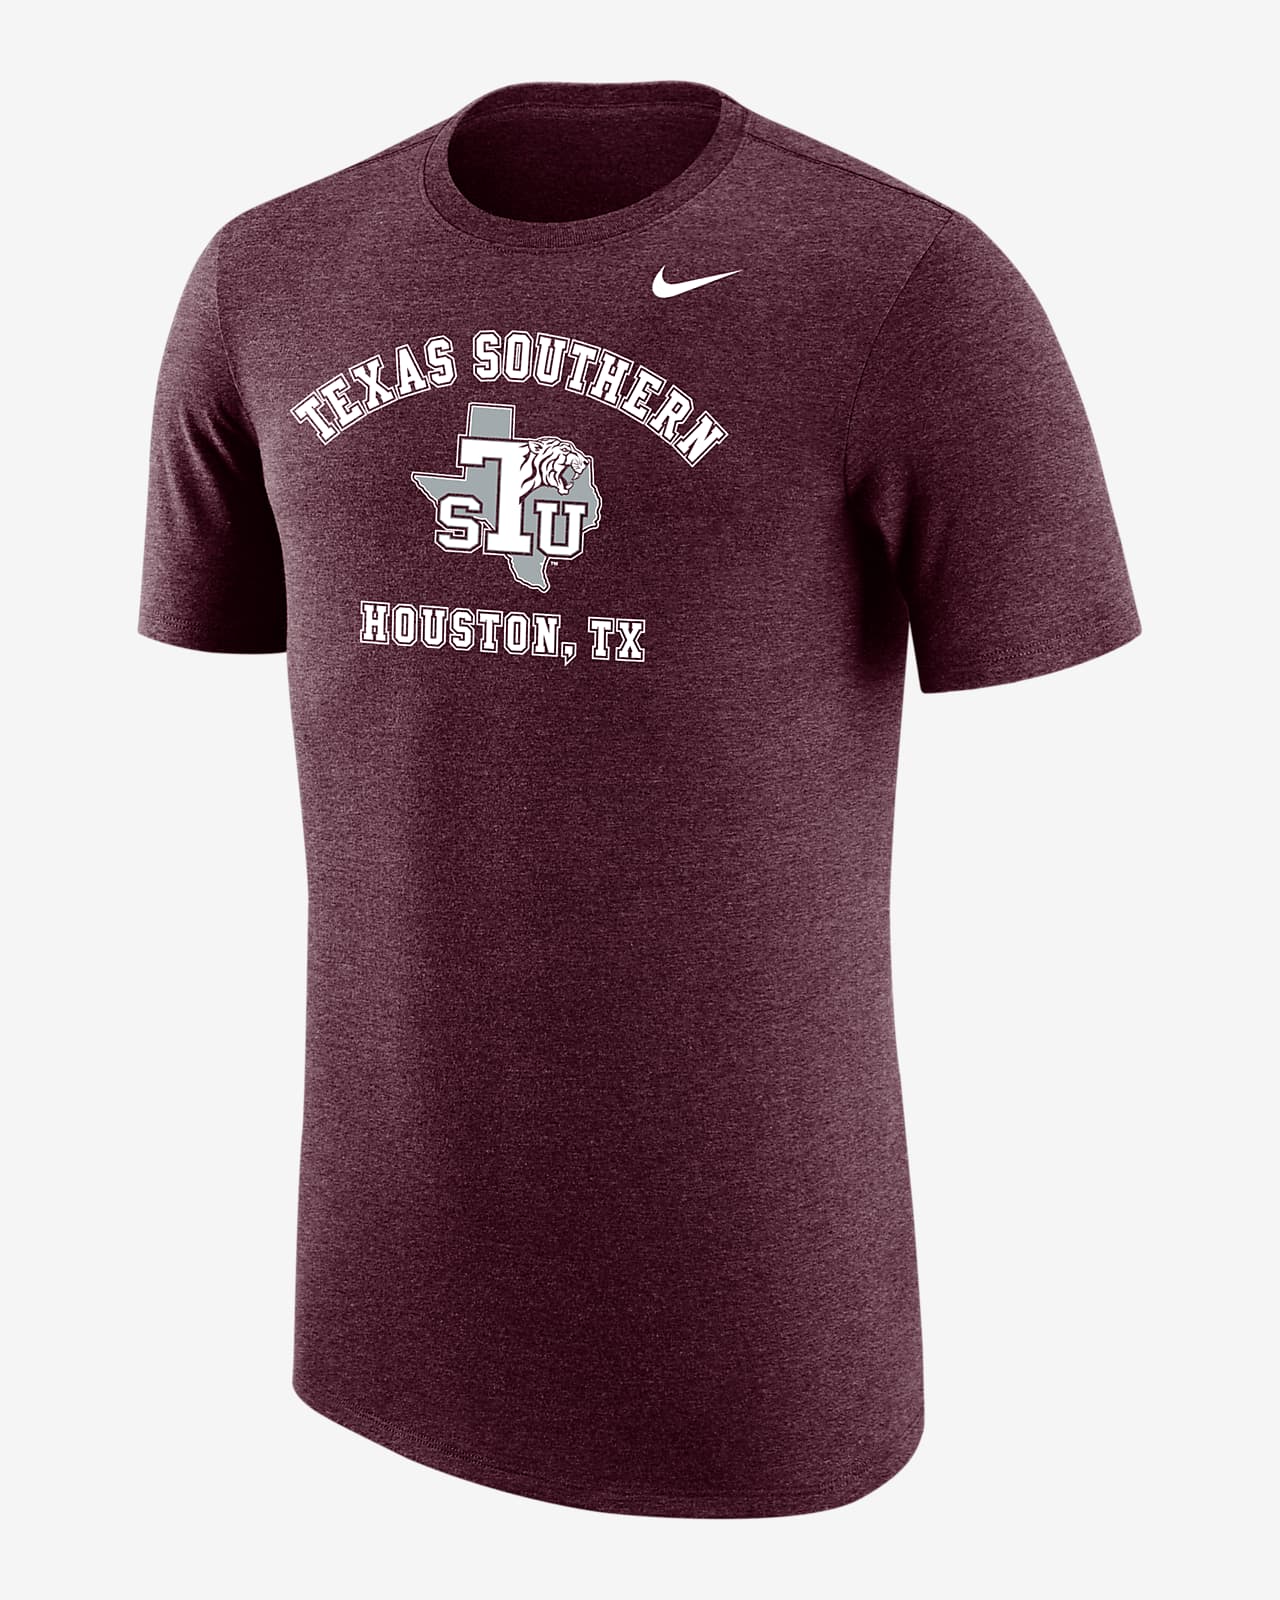 Texas Southern Men's Nike College T-Shirt